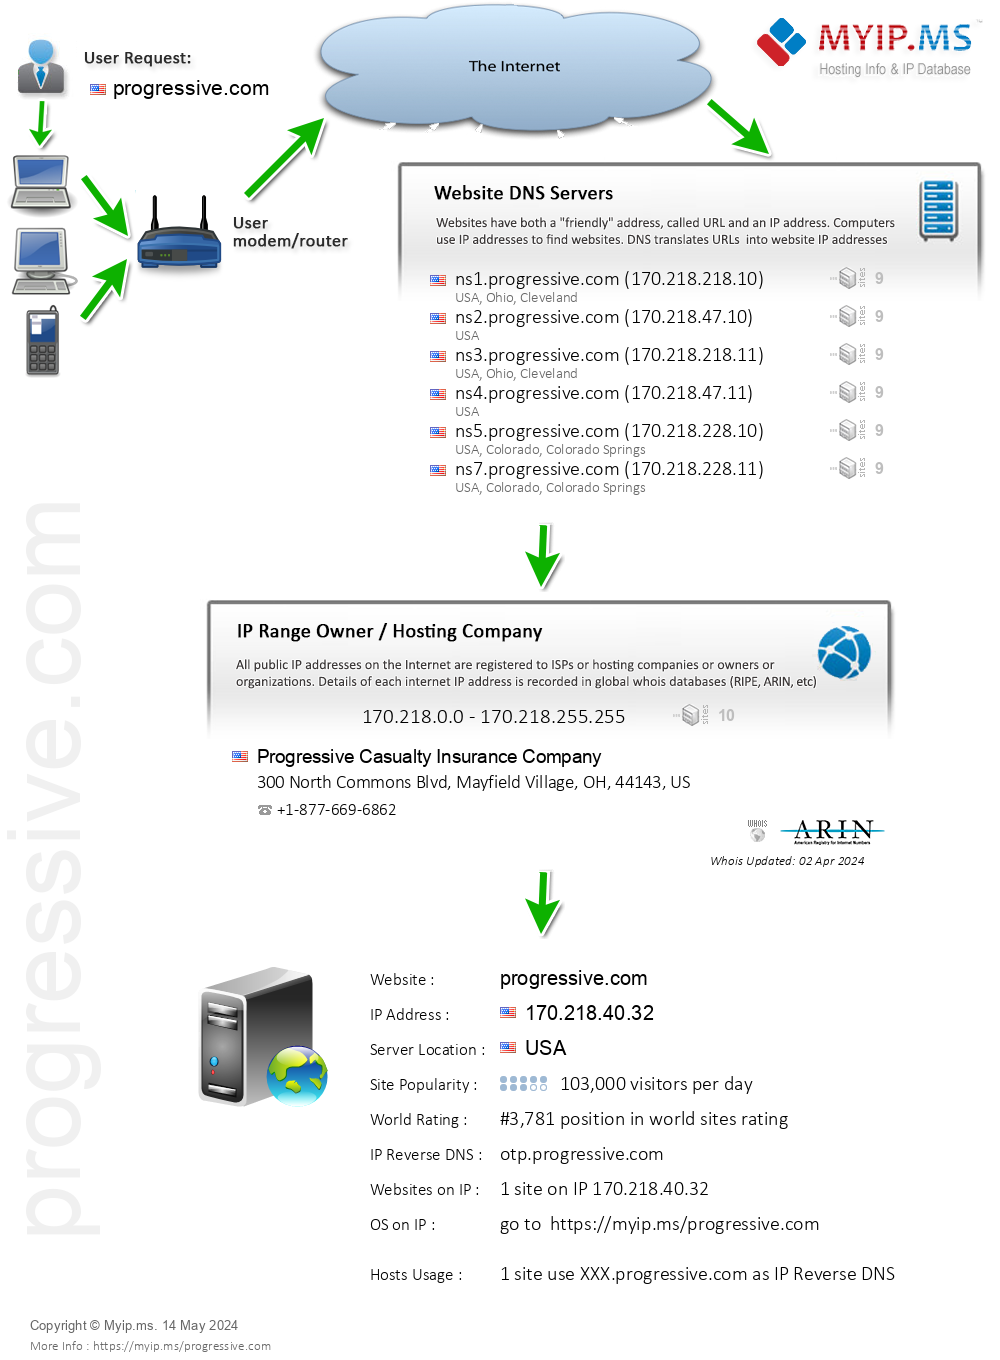 Progressive.com - Website Hosting Visual IP Diagram